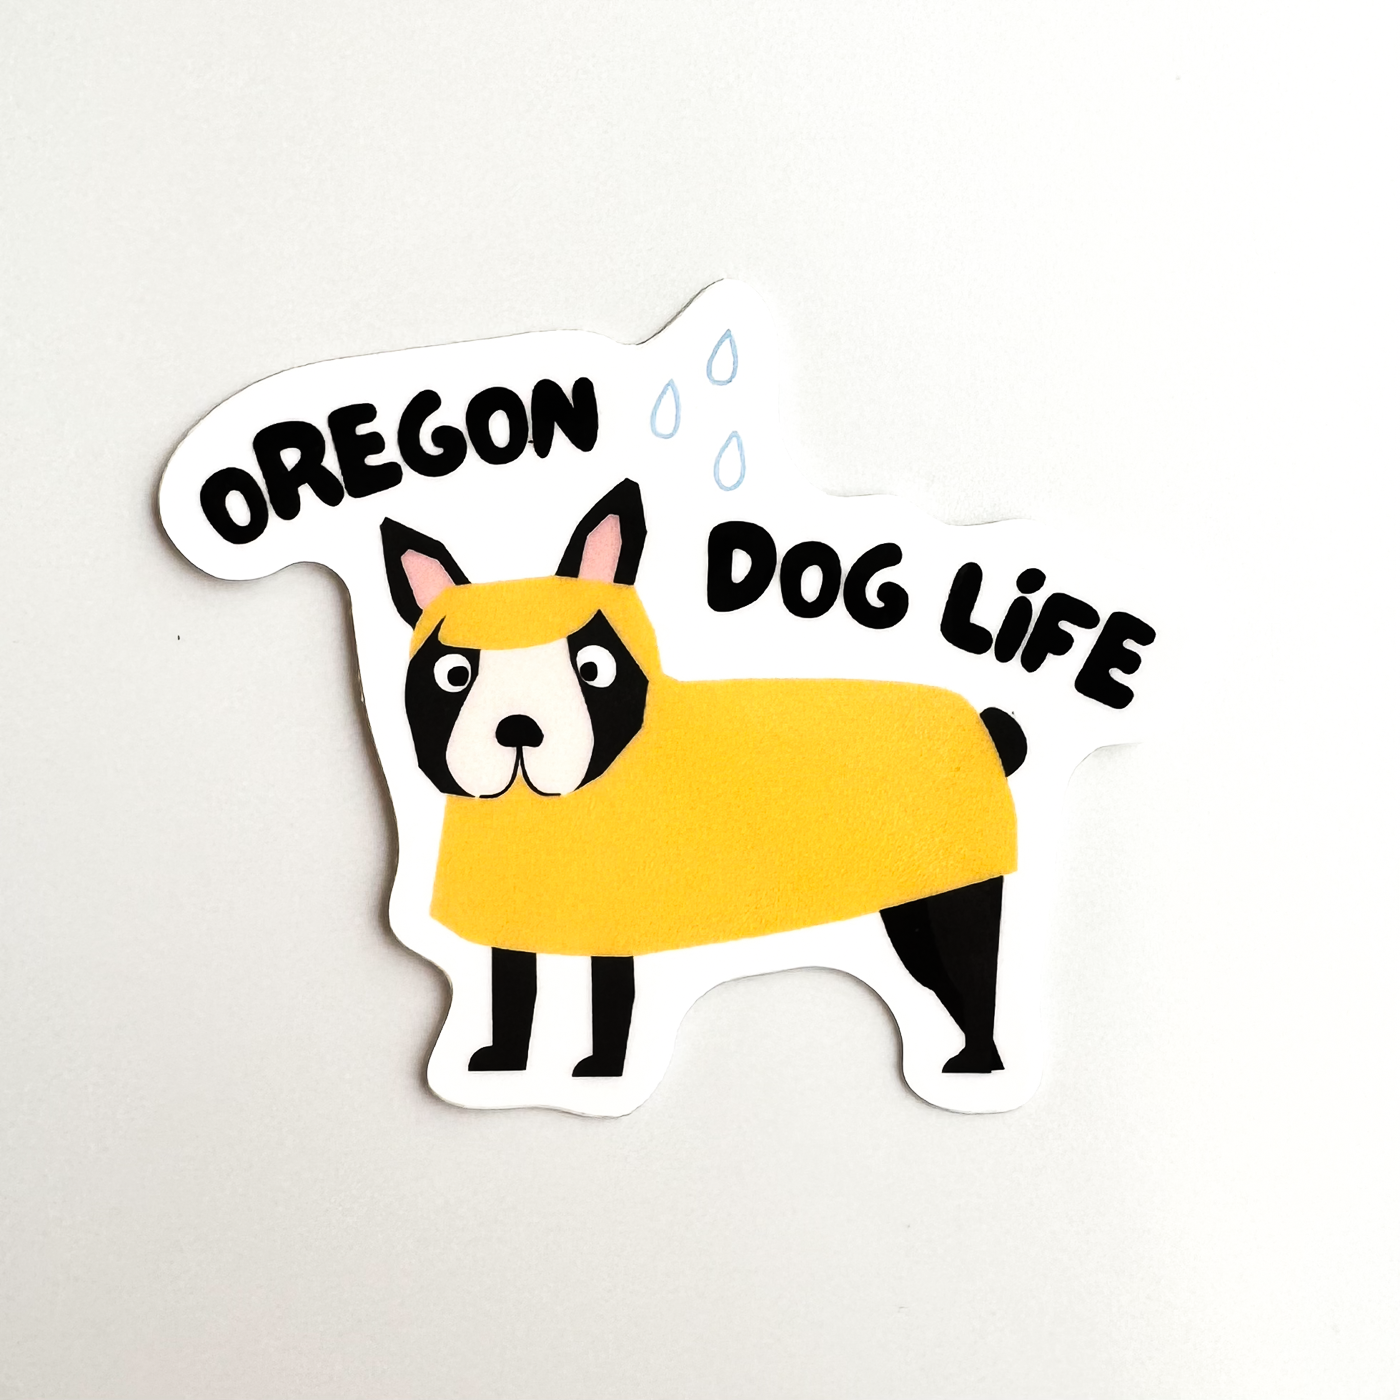 Boston Terrier Dog wearing a yellow rain jacket "Oregon Dog Life" sticker